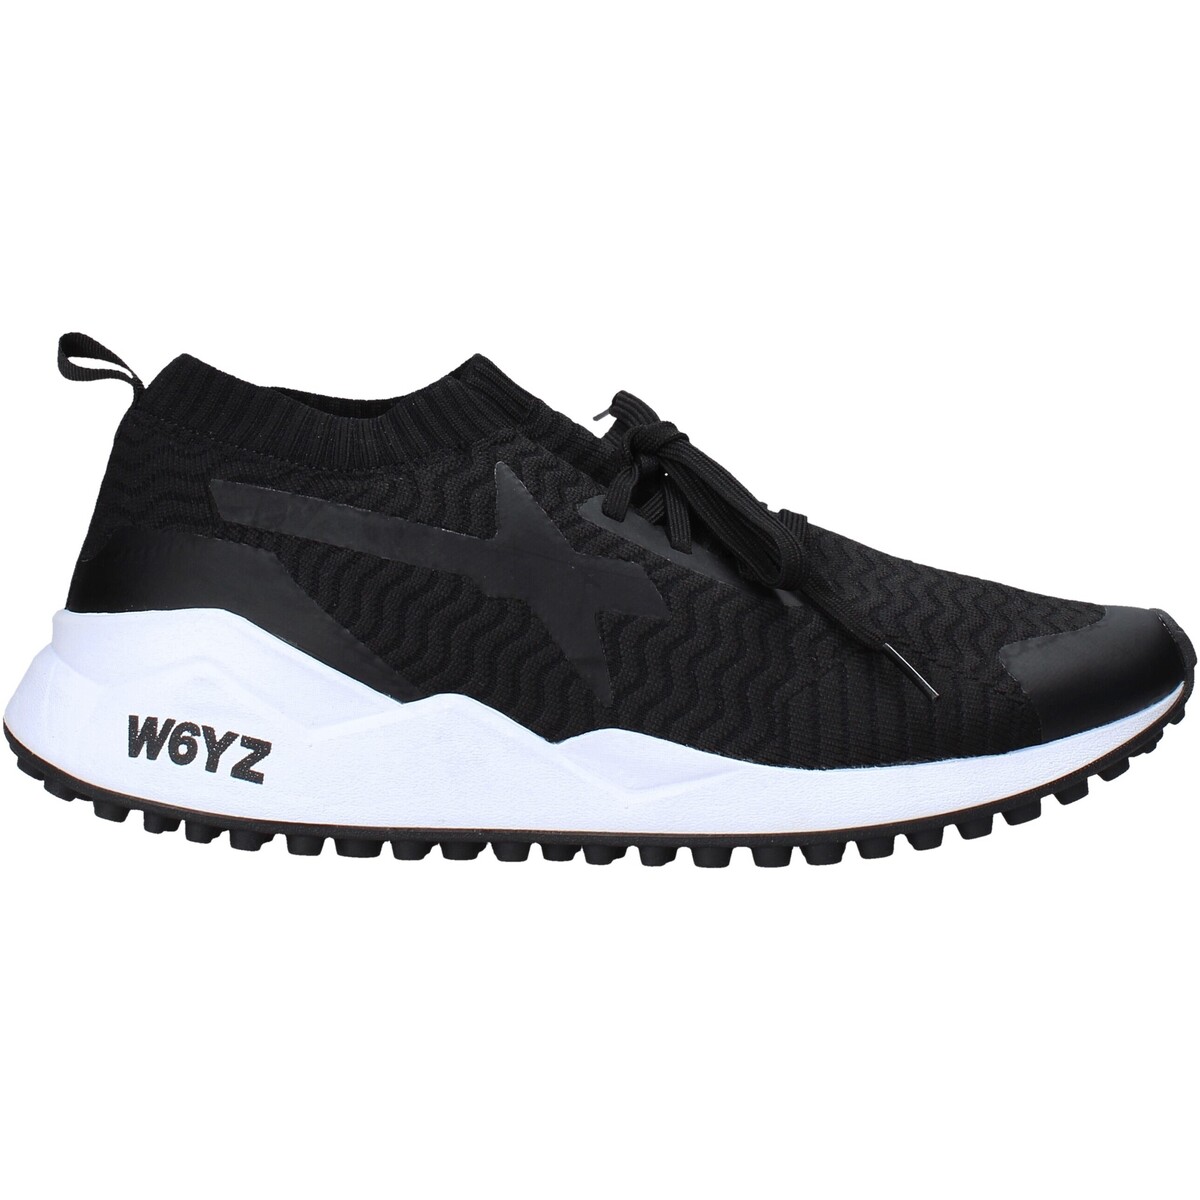 Xαμηλά Sneakers W6yz 2014538 01